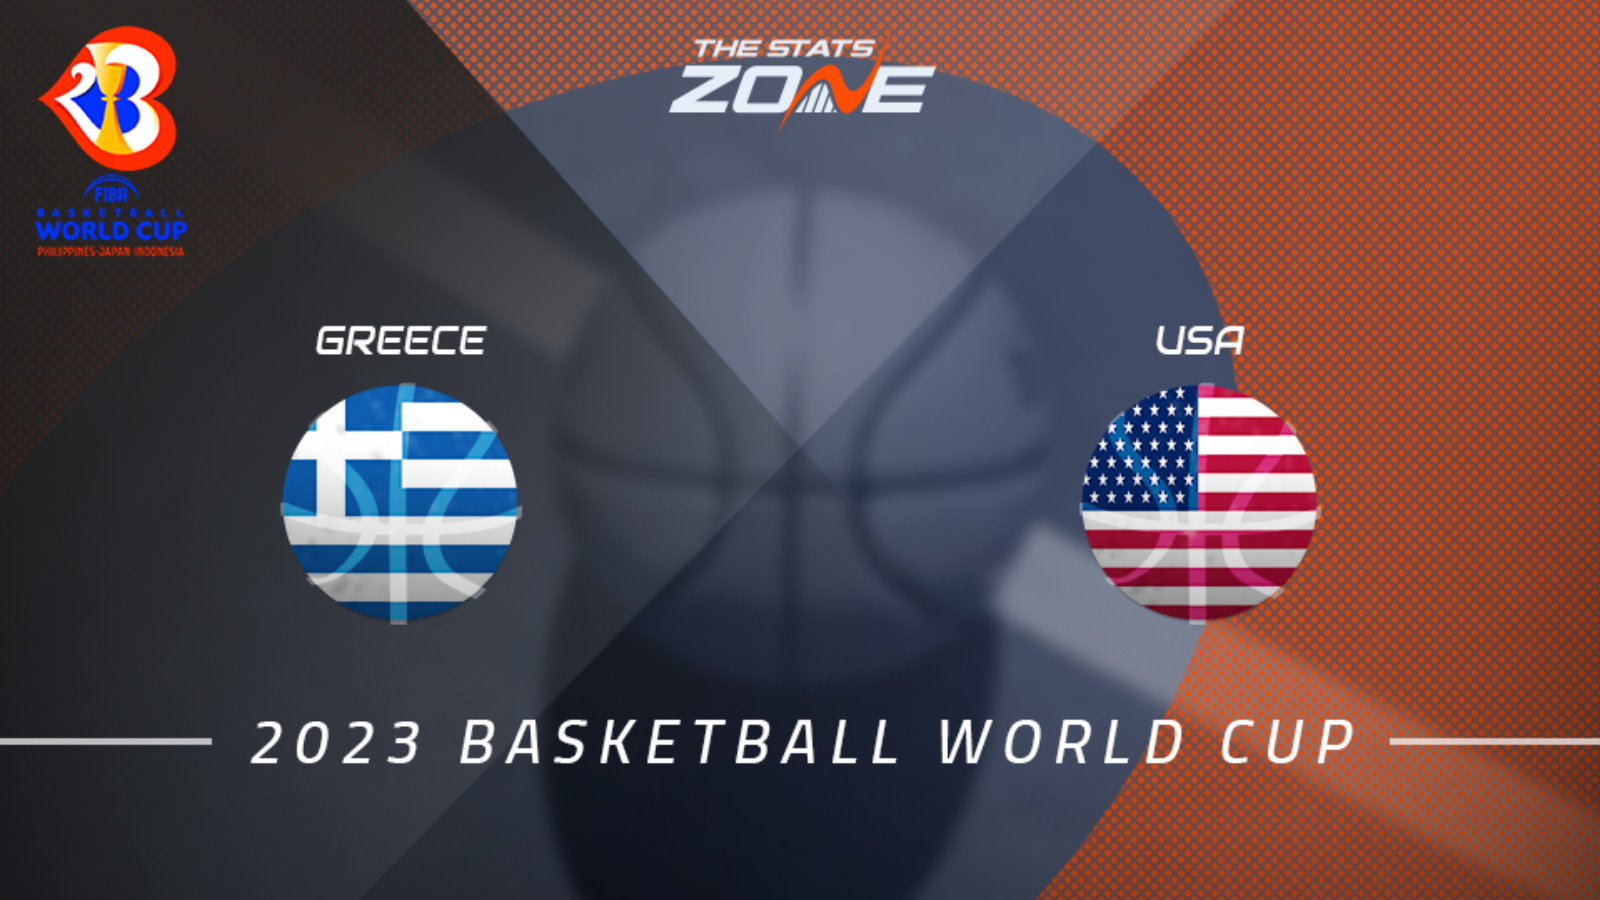 Greece vs USA Group Stage Preview & Prediction 2023 FIBA